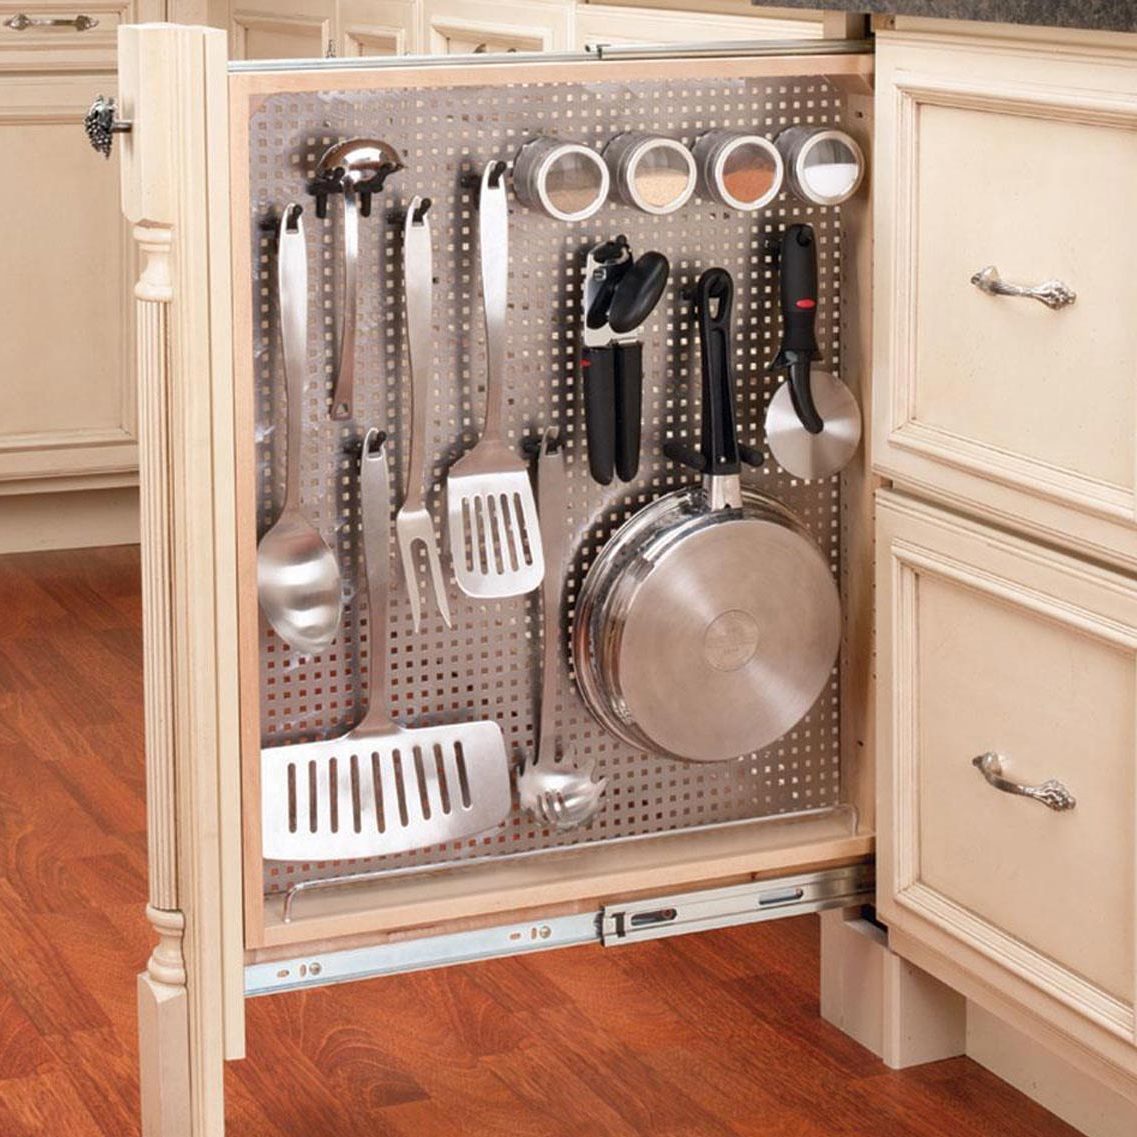 Household hints vertical kitchen cabinet storage